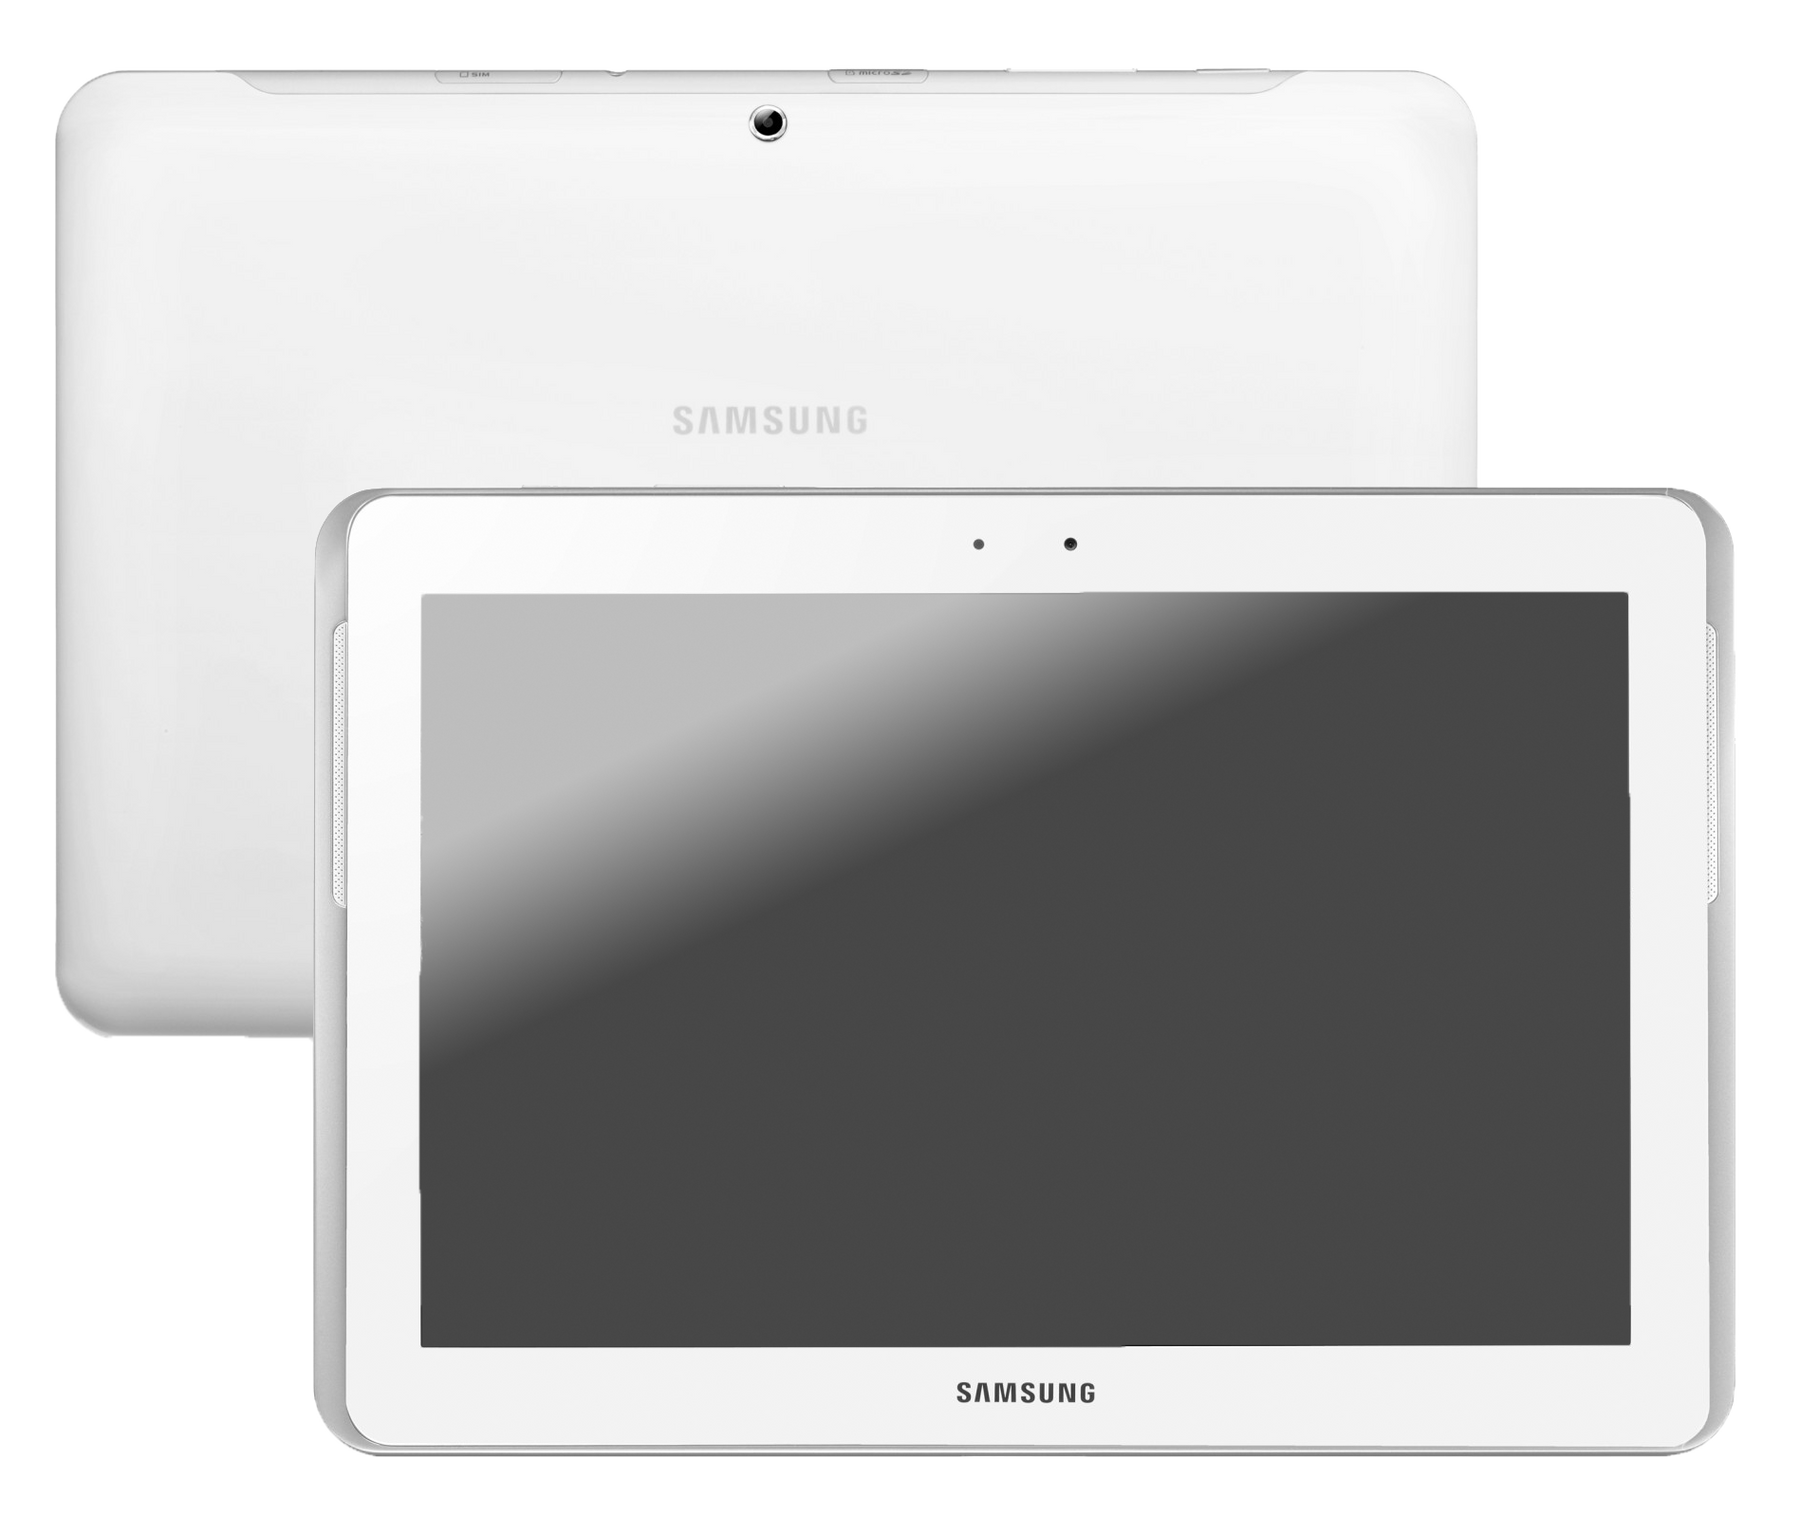 Samsung Galaxy Tab 2 10.1 3G P5100 weiß  - Ohne Vertrag